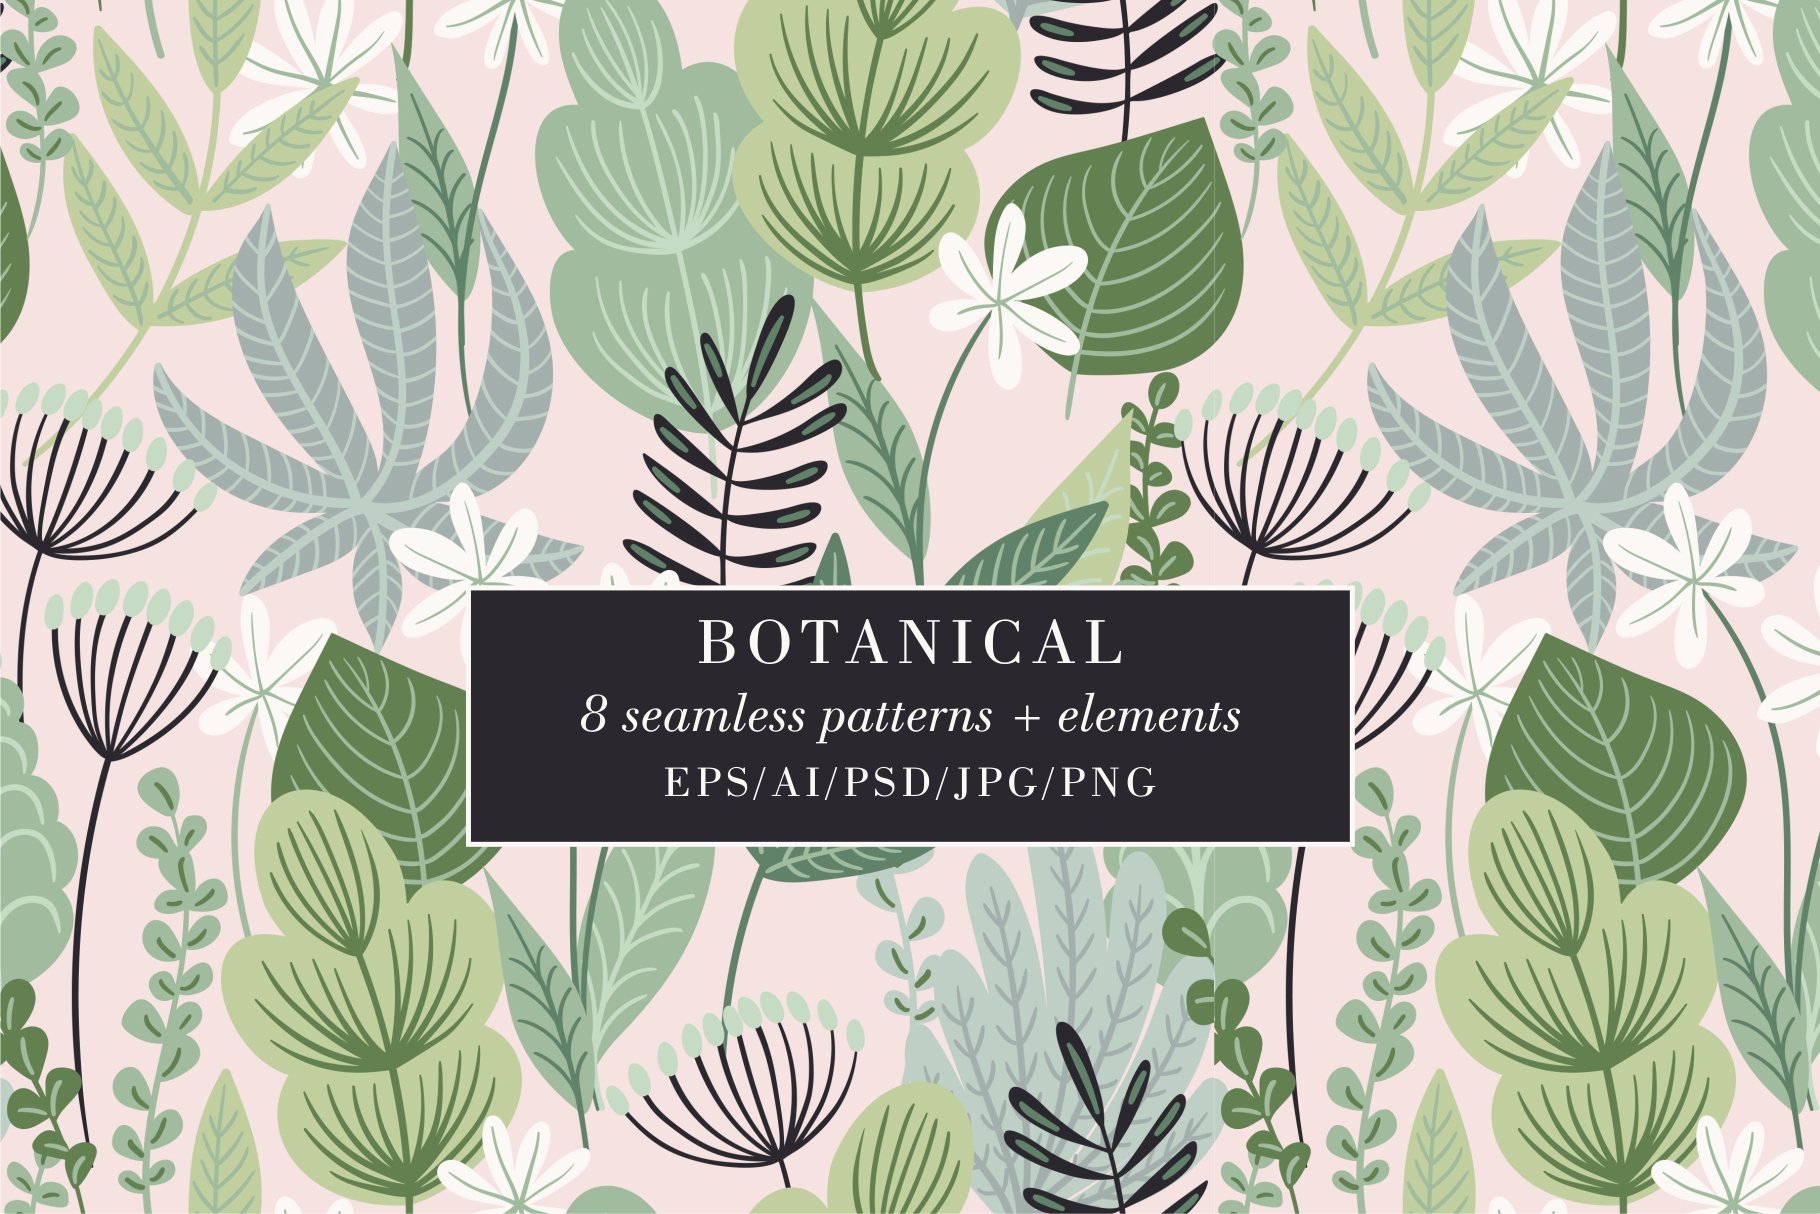 Botanical patterns & elements cover image.